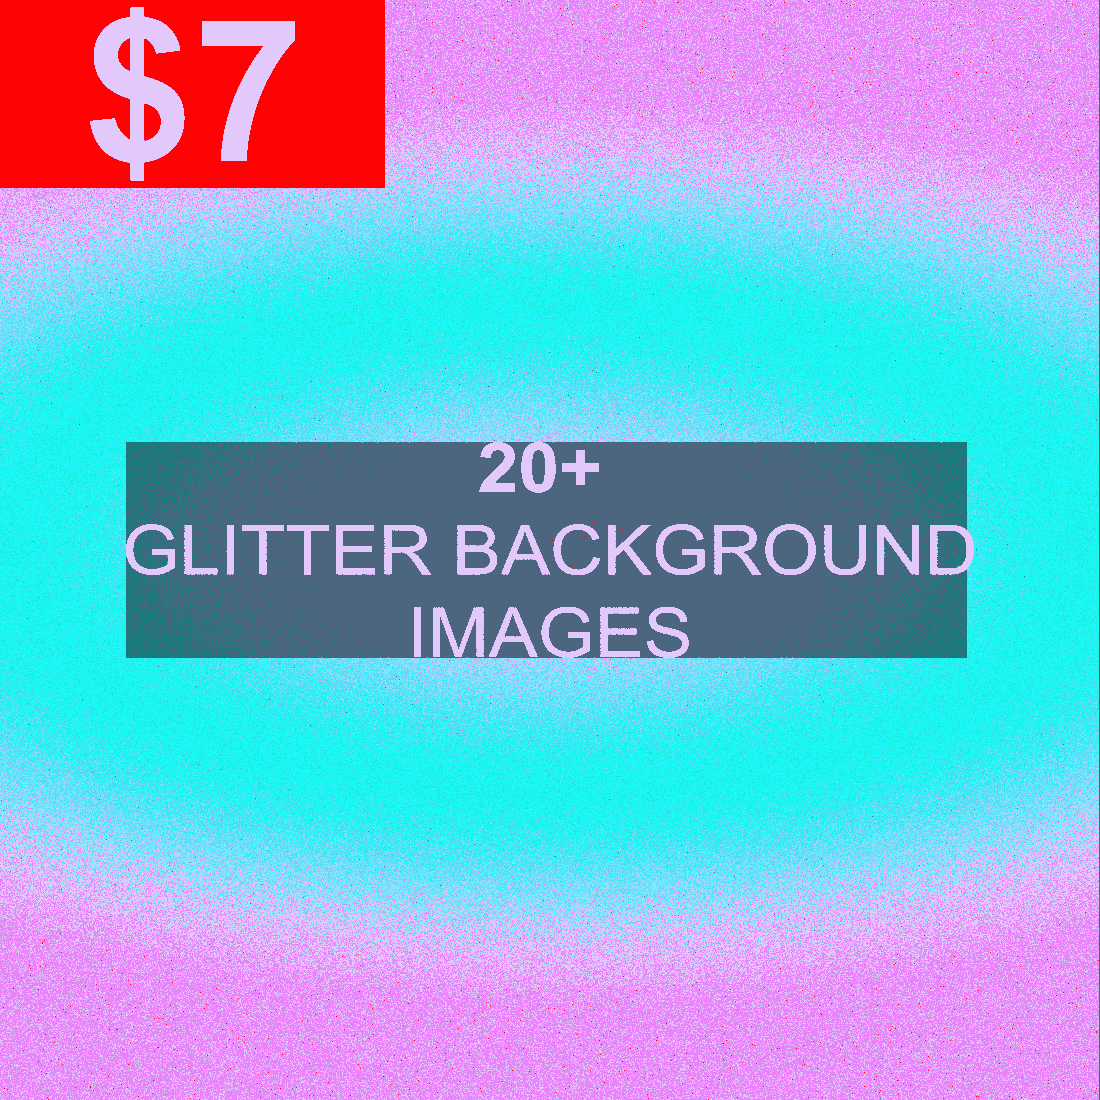 Glitter Gradient Background Design cover image.